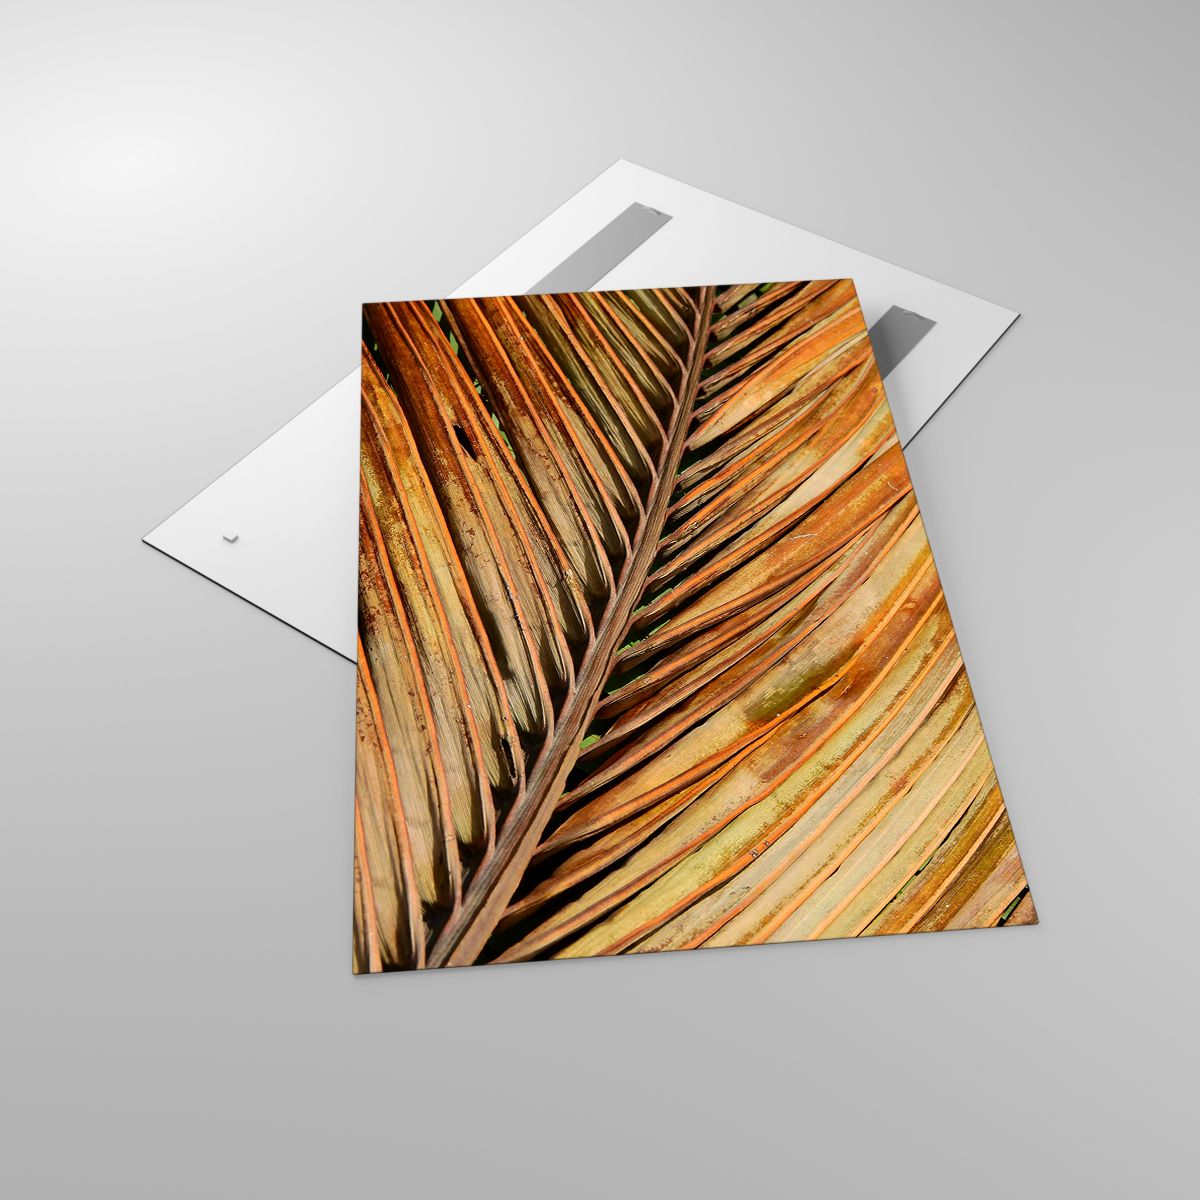 Glasbild Kokusnuss-Palme, Glasbild Palmenblätter, Glasbild Urwald, Glasbild Natur, Glasbild Blumen